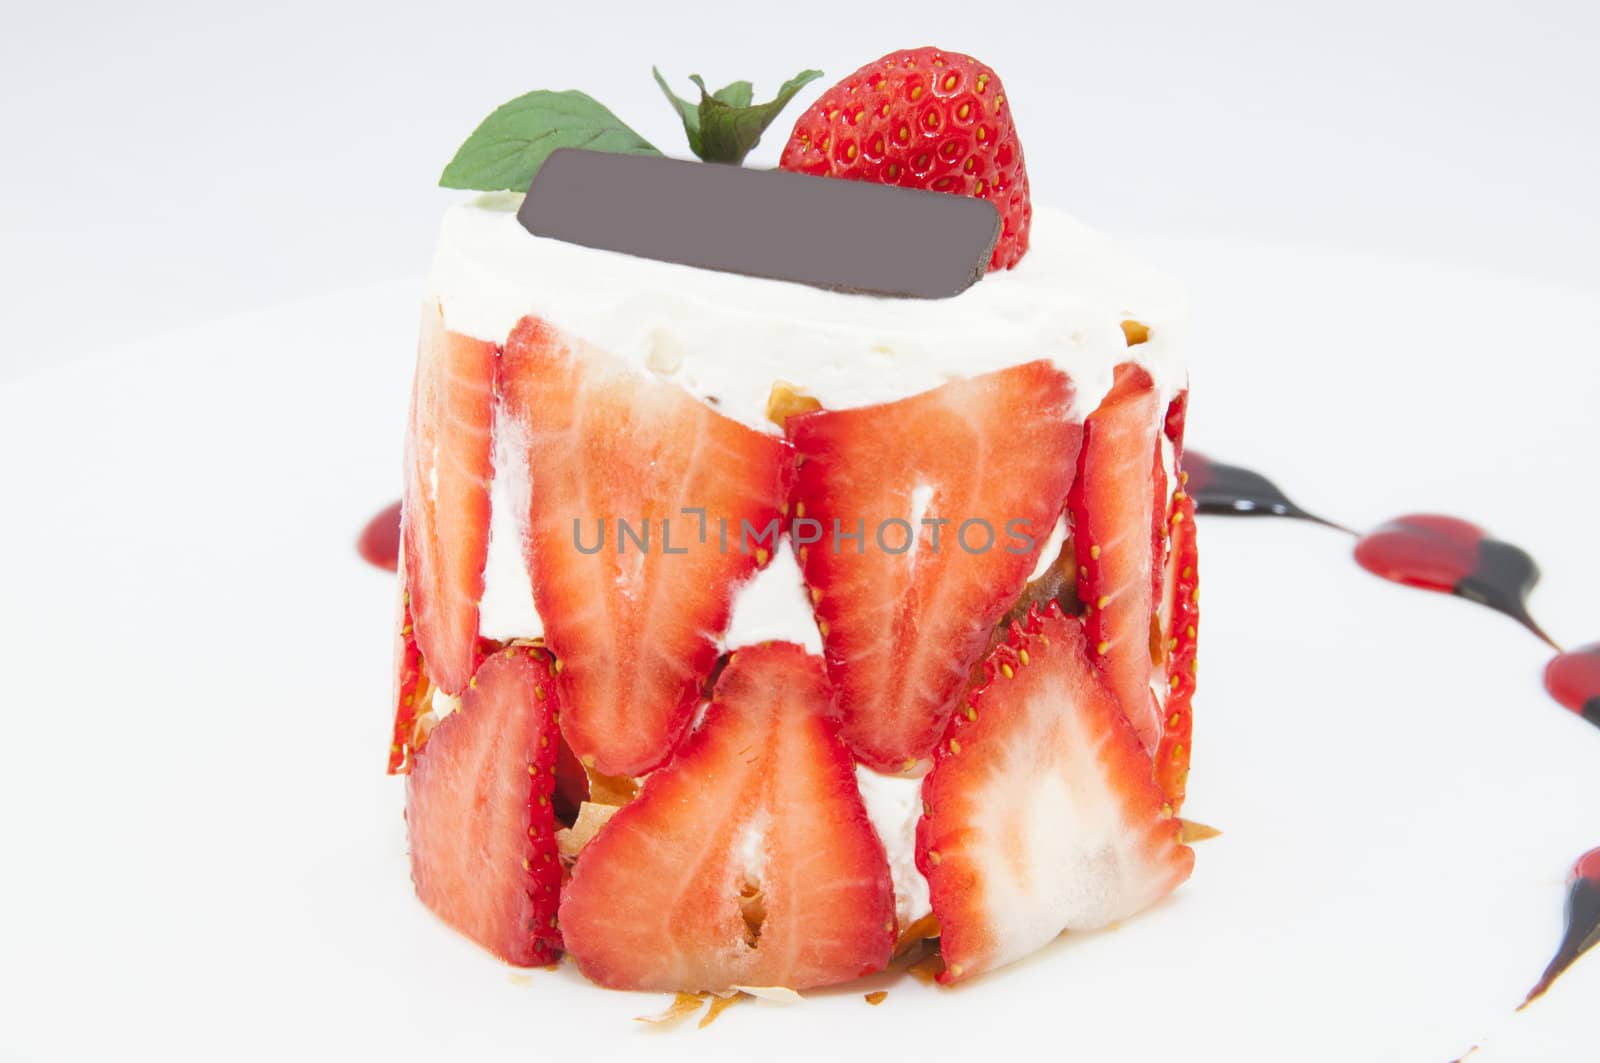 creamy strawberry dessert by Lester120